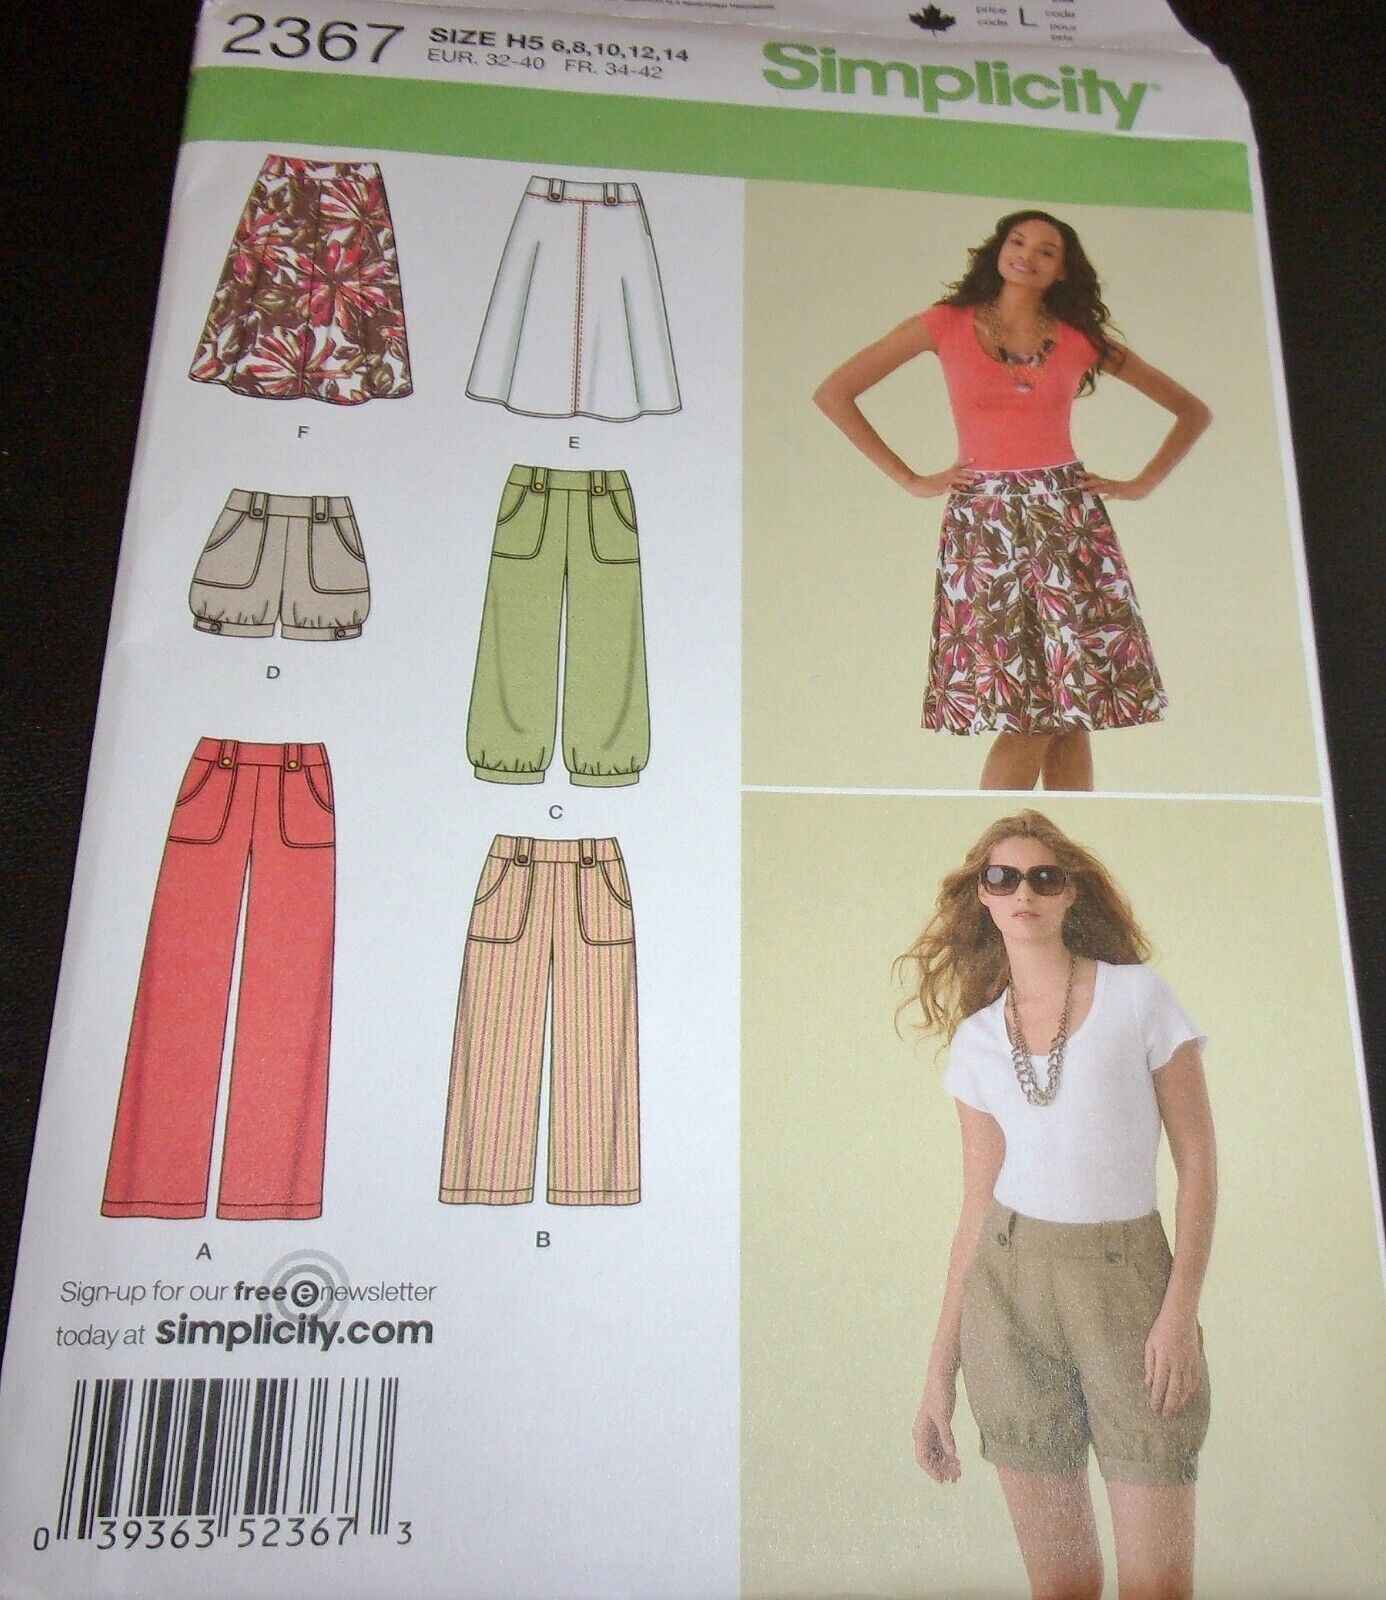 Simplicity Pattern 2367 Skirt Pants Shorts Sportswear Separates Size 6-14 Uncut